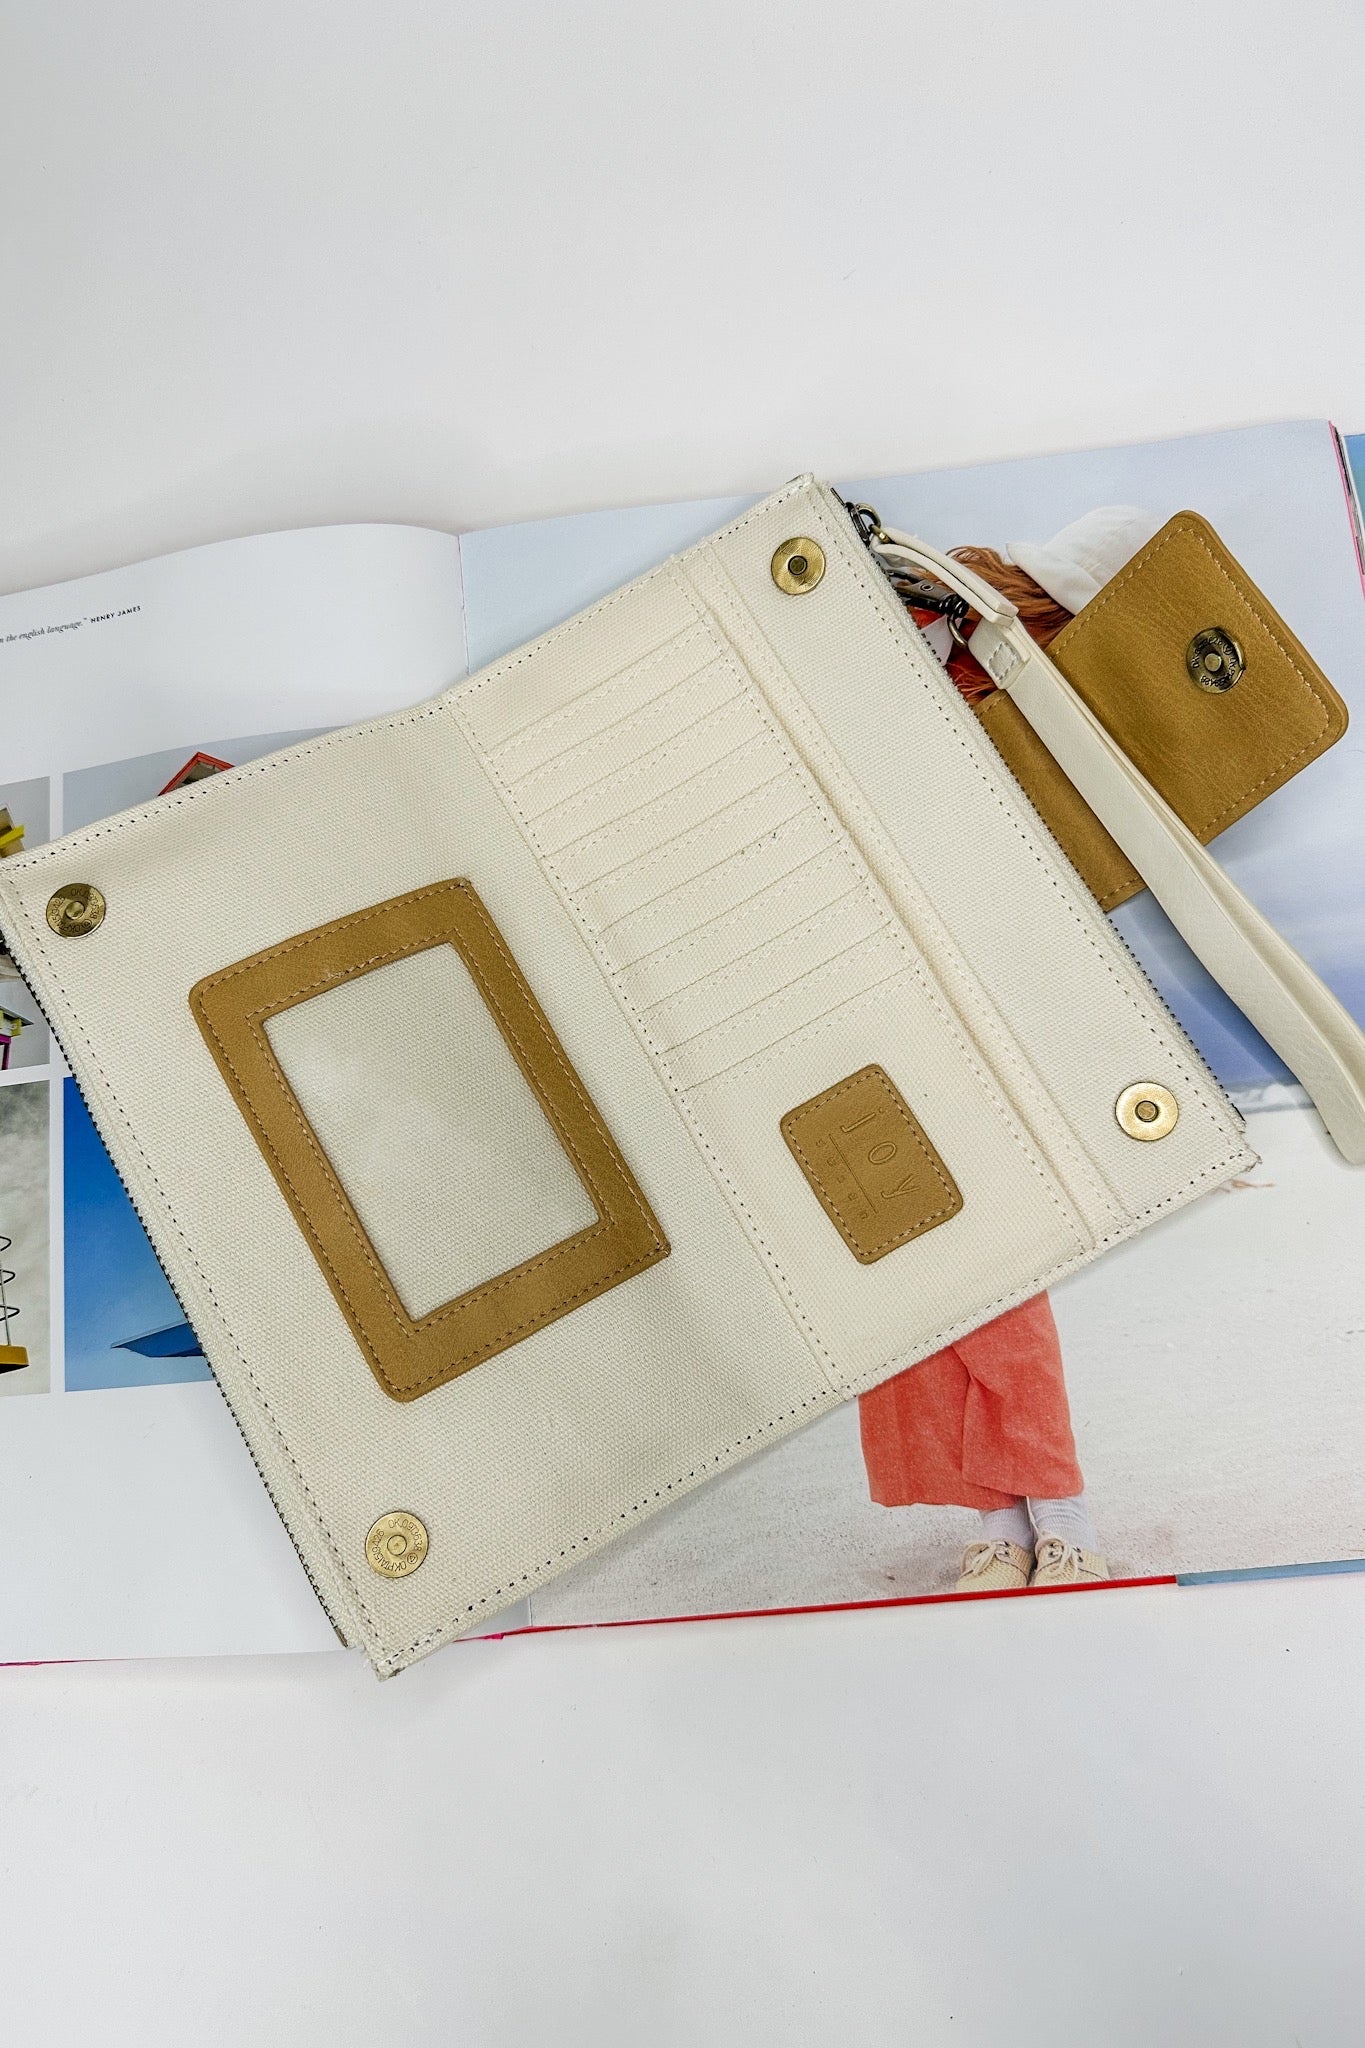 The Camryn Colorblock Wallet Crossbody in White/Tan by Joy Susan